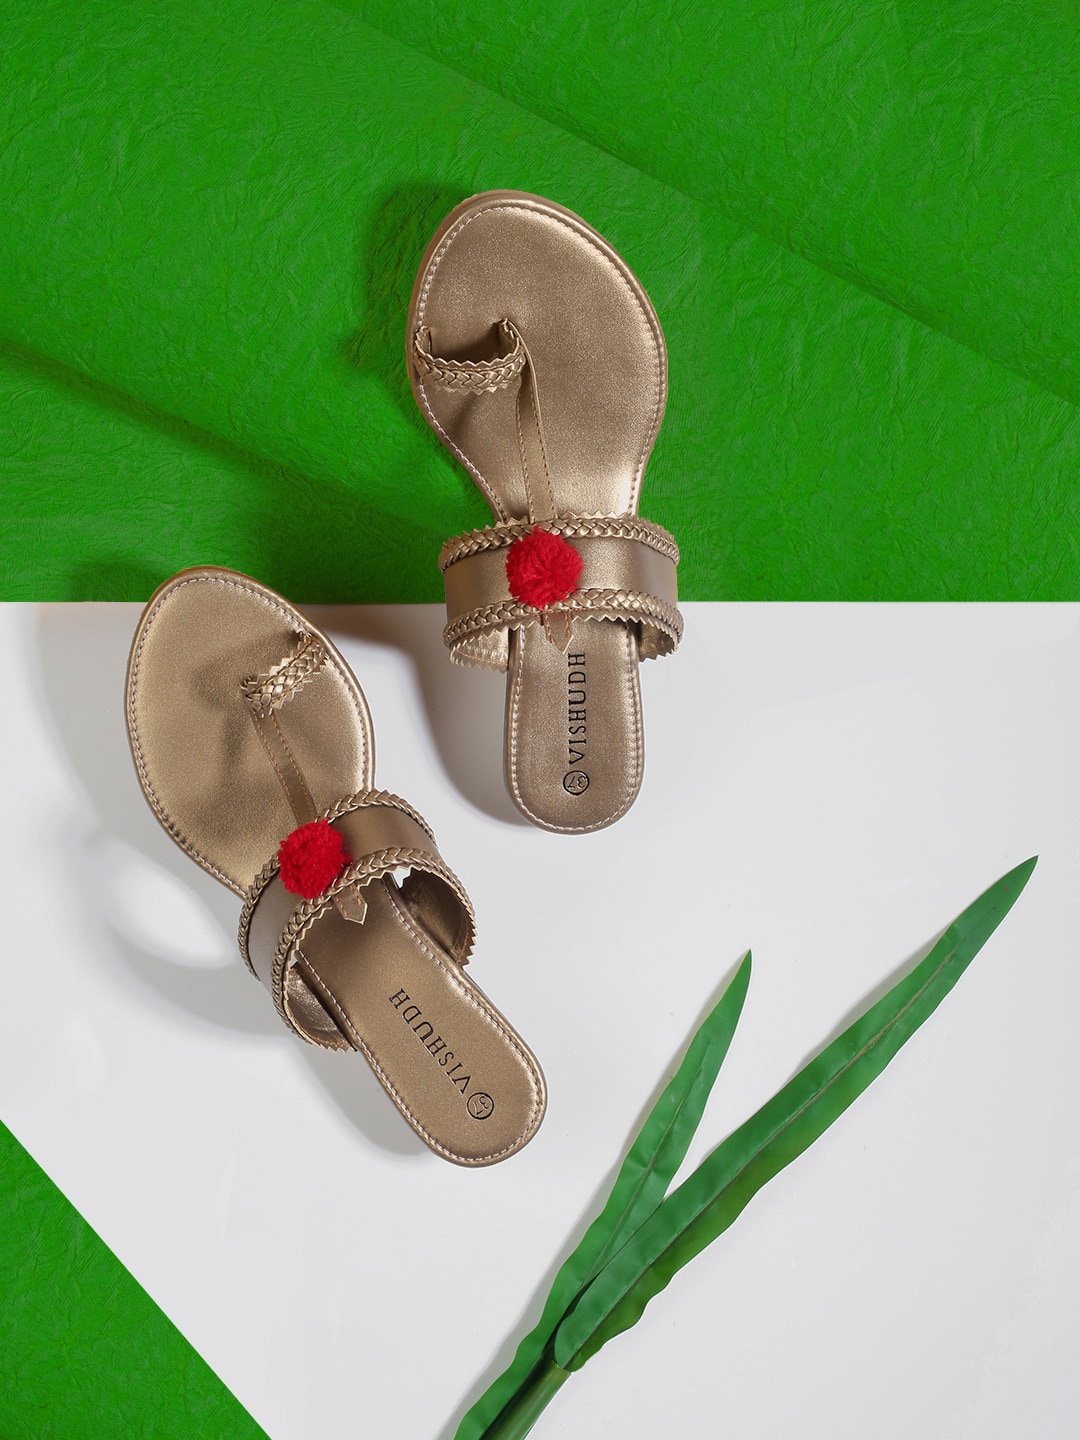 Vishudh Gold-Toned Embellished Wedge Sandals Price in India